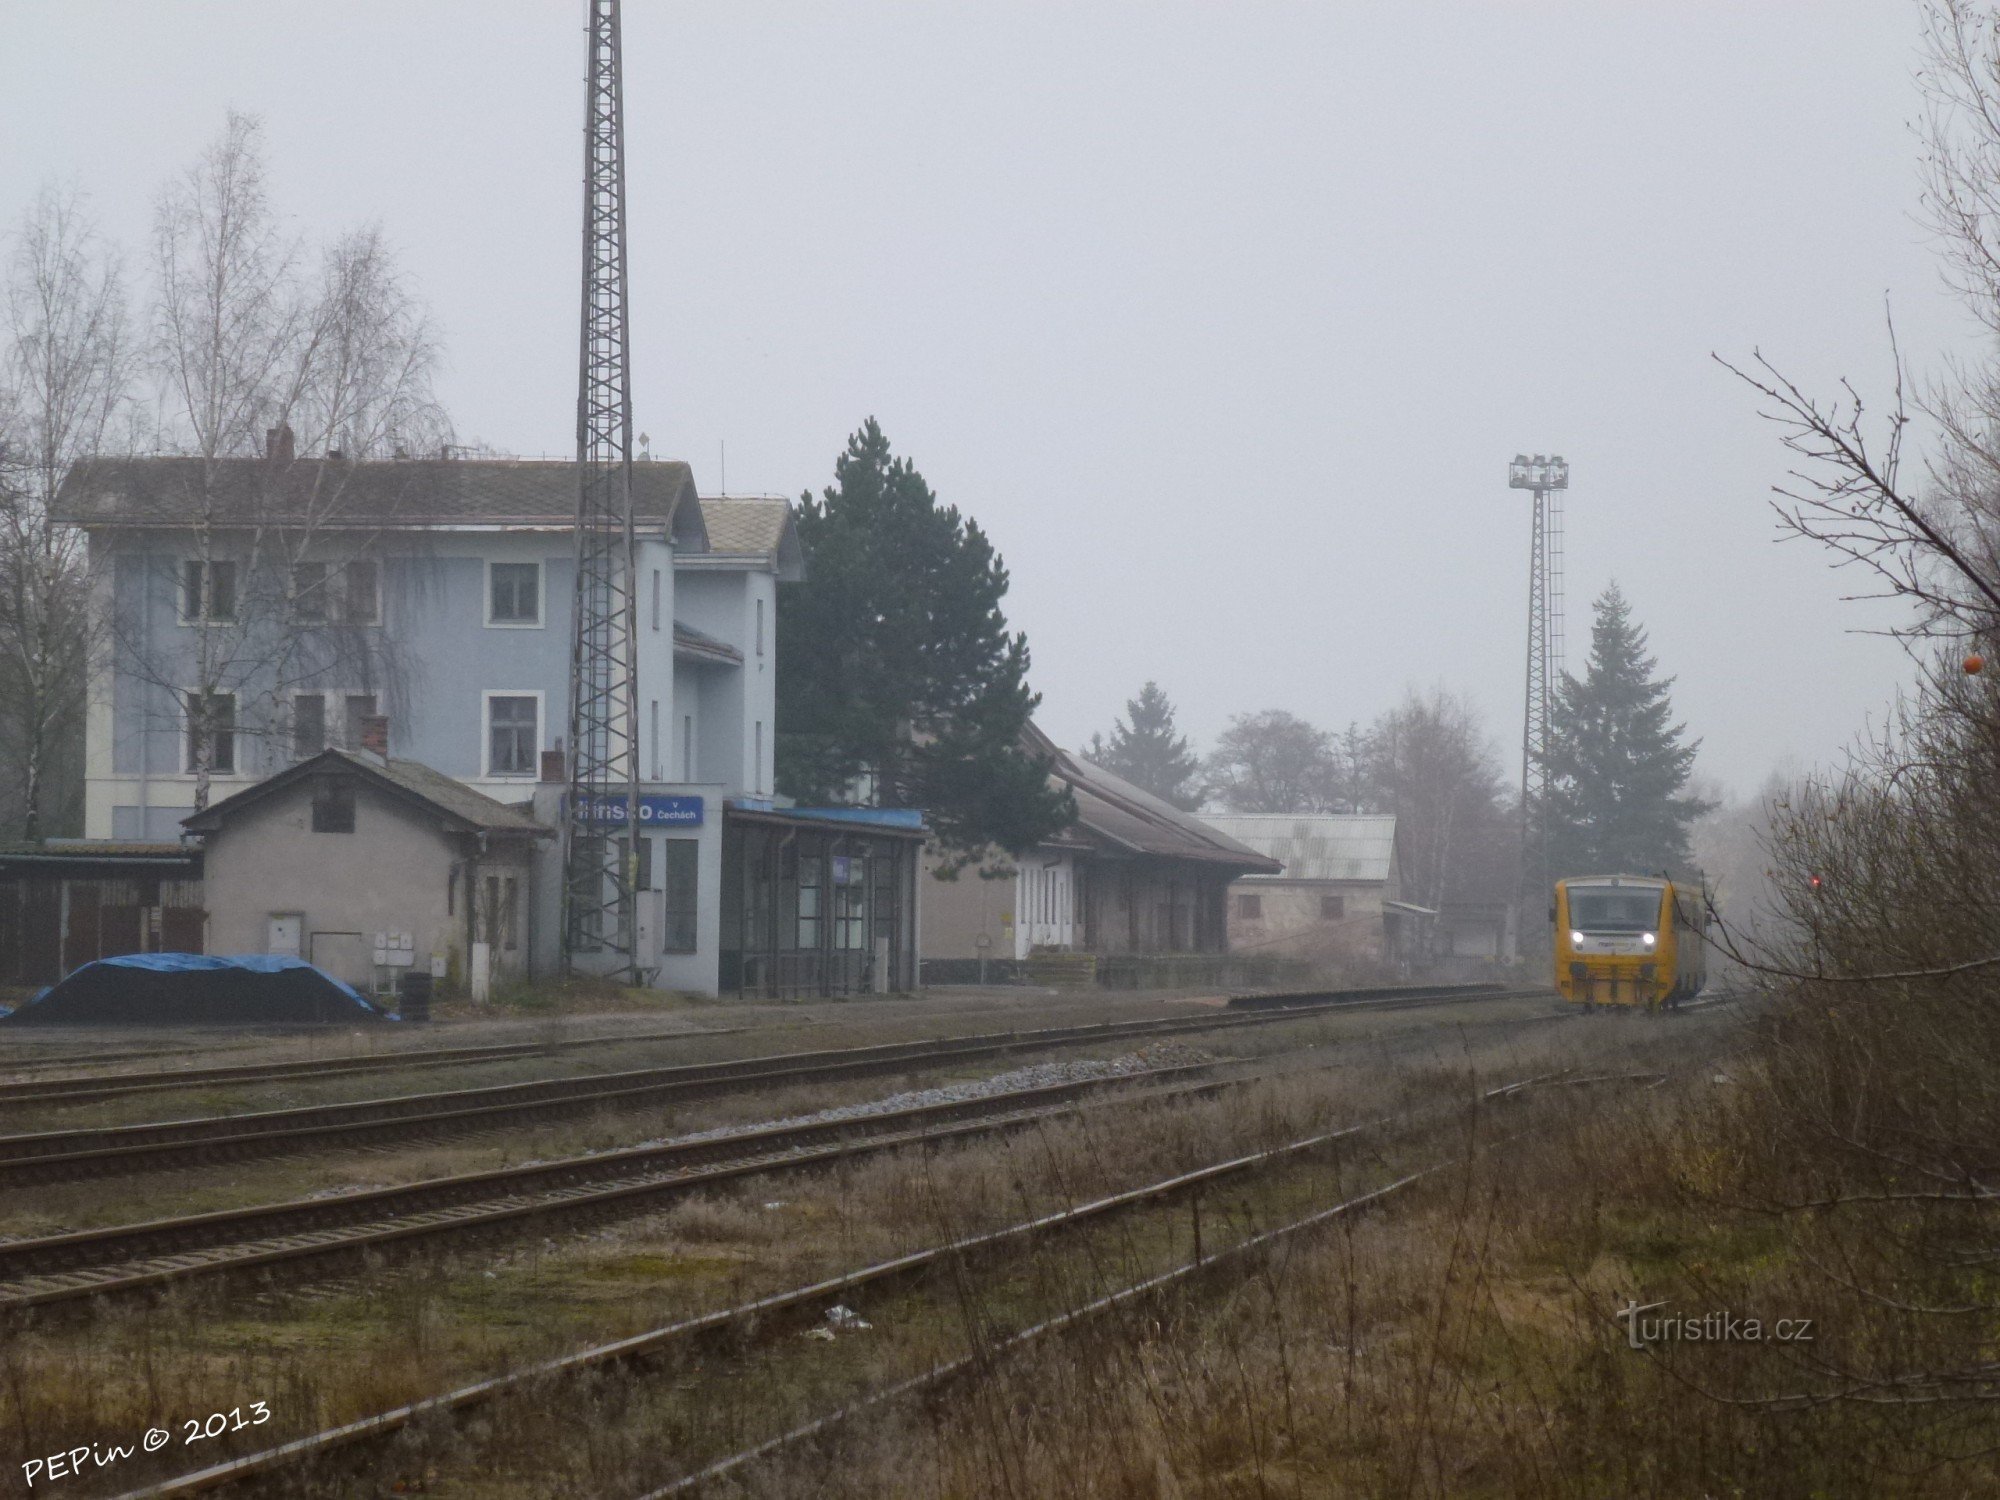 Hlinsko în Boemia, gara, curte de cale ferată